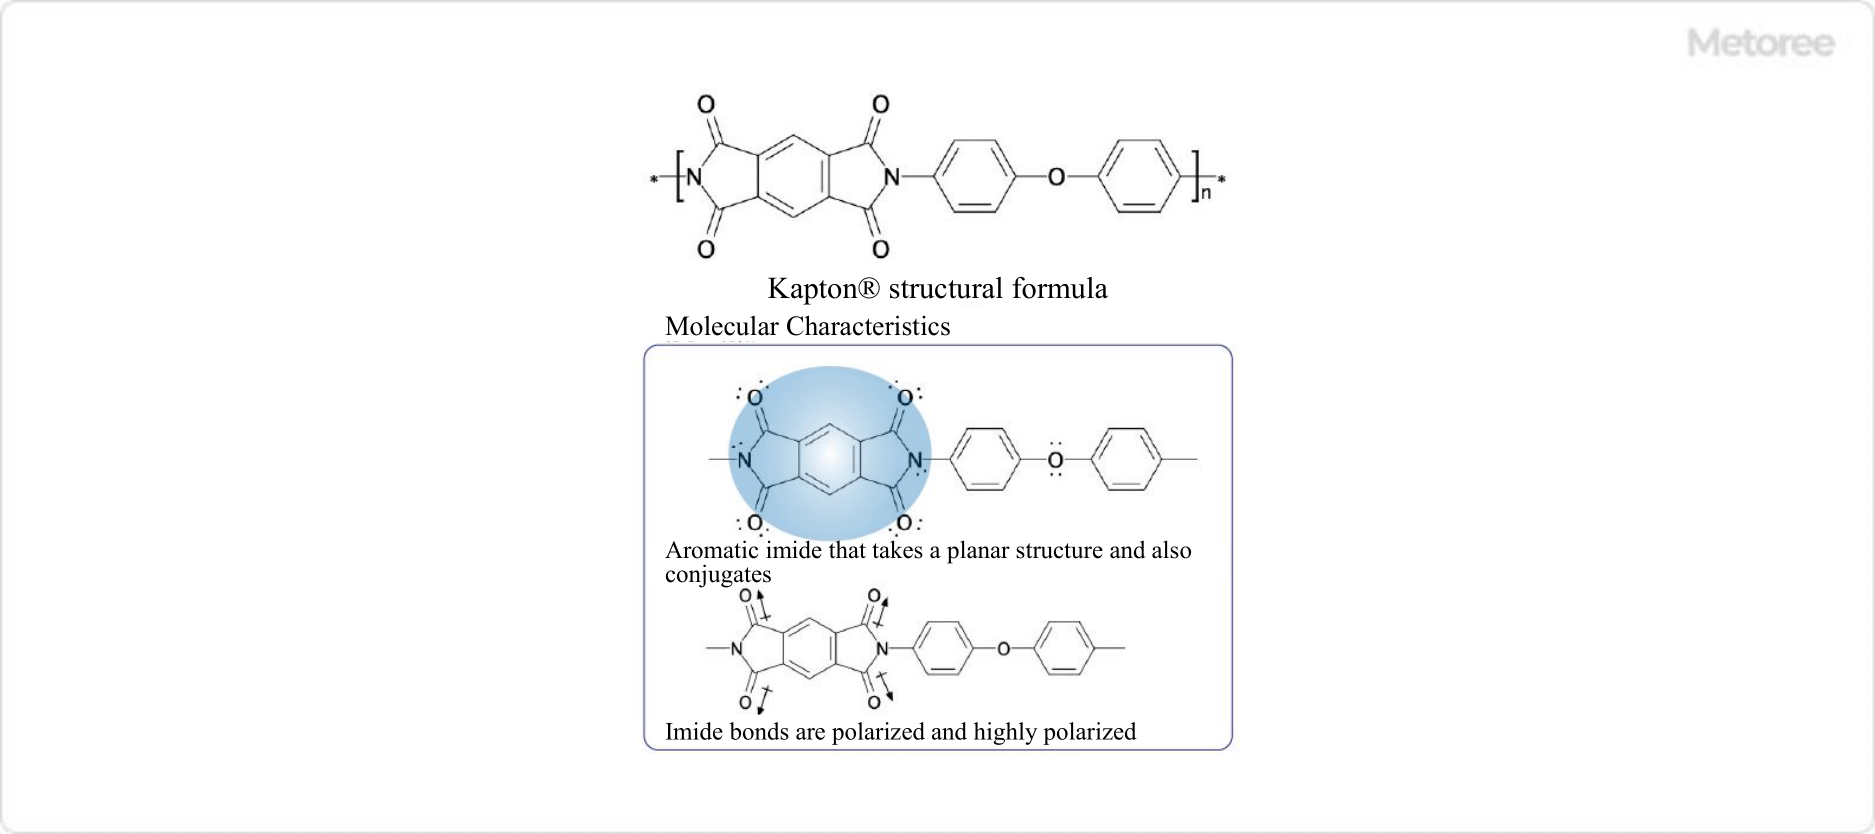 Figure 3. Kapton® Structure and Characteristics